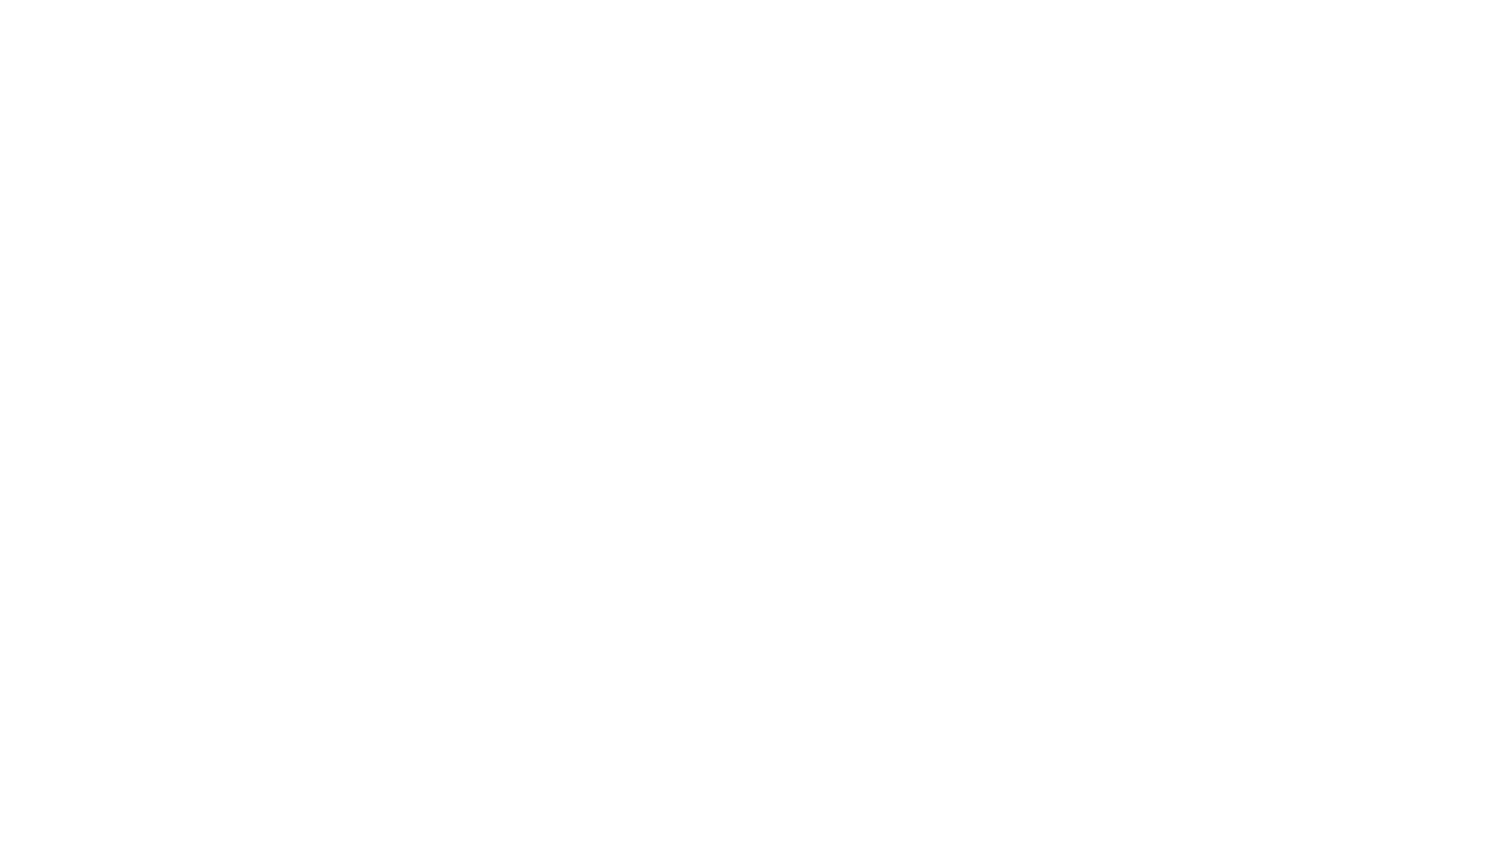 The Kelly School of Irish Dance